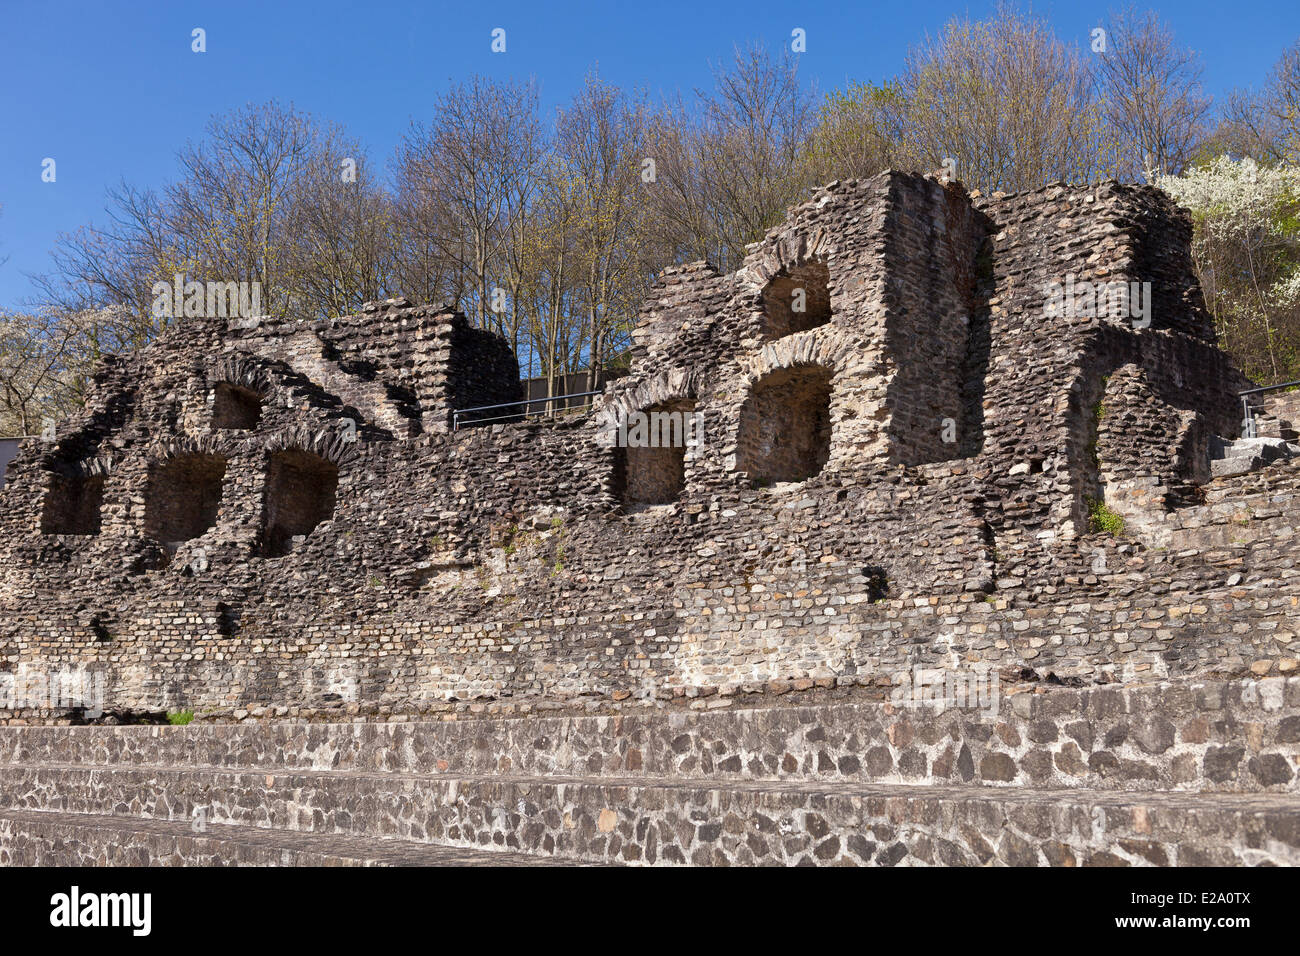 Francia, Ródano, Lyon, sitio histórico catalogado como Patrimonio Mundial por la UNESCO, la colline de Fourviere, Teatro Romano. Foto de stock